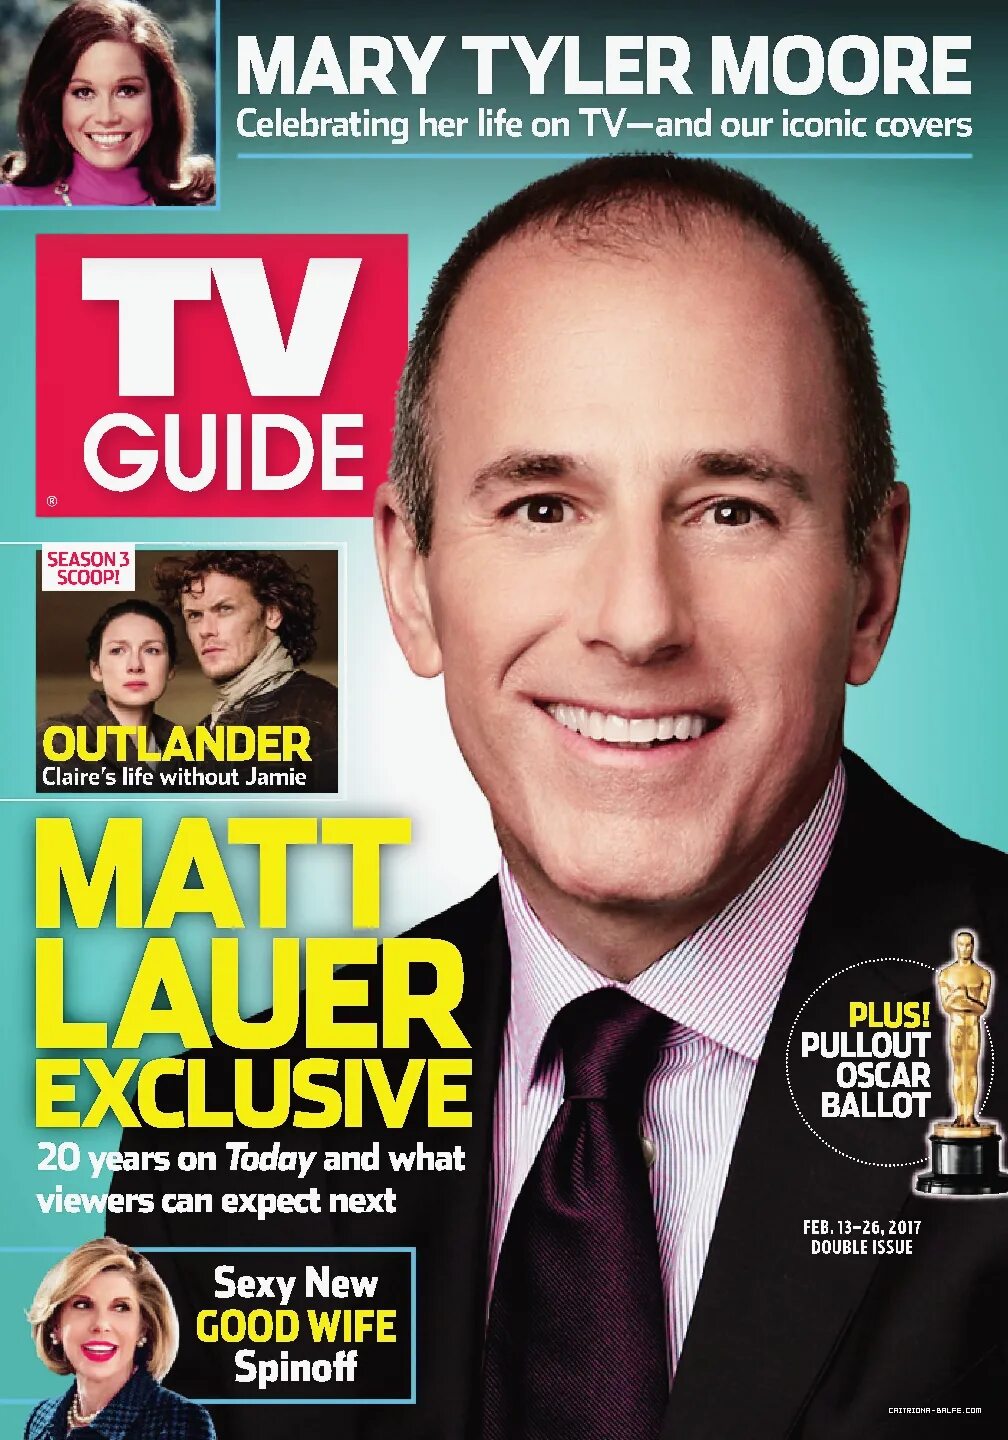 TV Guide. USA TV Guide. TV Guide Magazine. The Guide журнал. Tv magazine